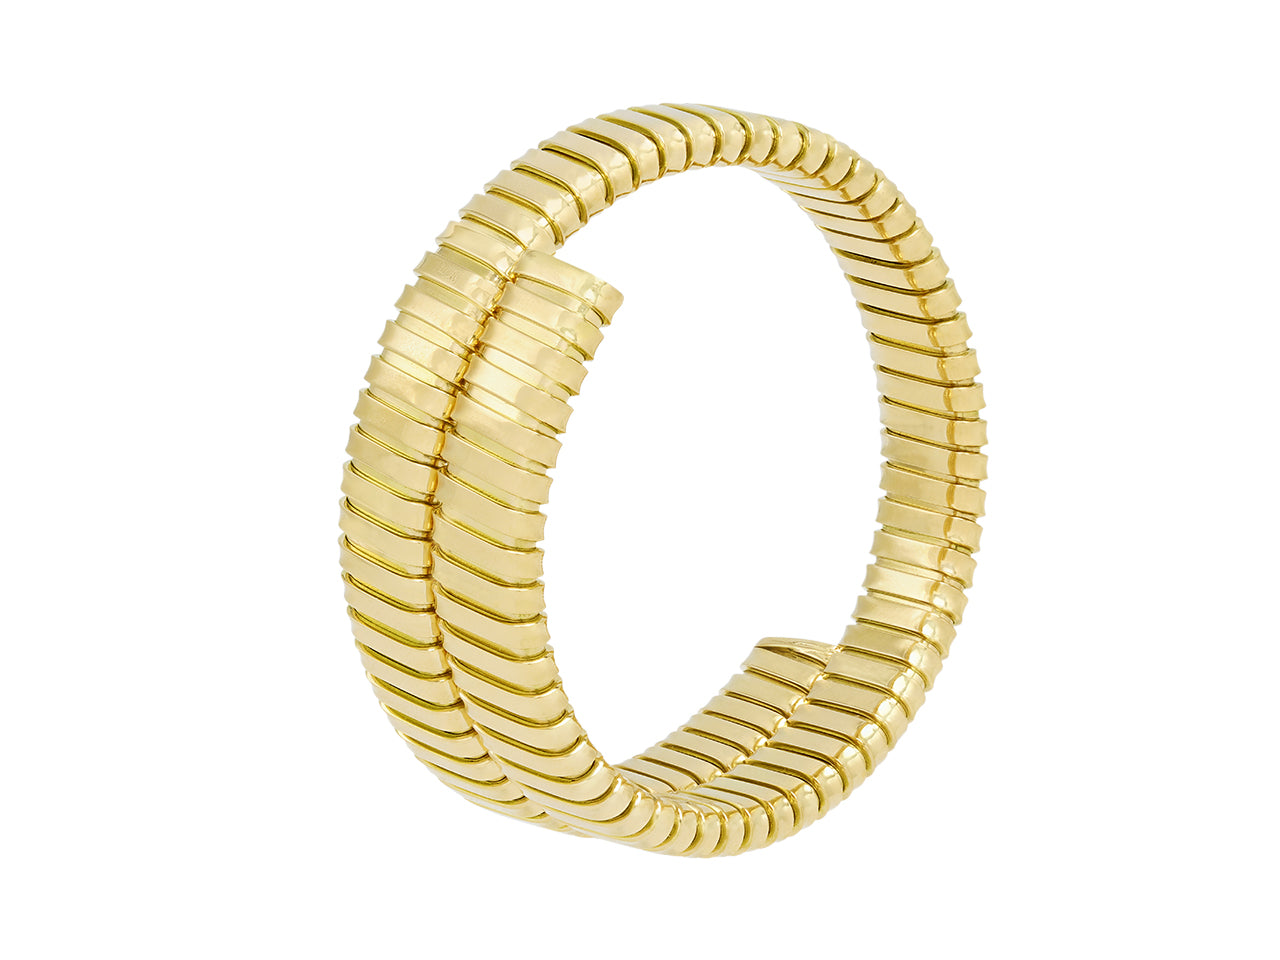 Italian Tubogas Double Coil Bracelet in 18K Gold, by Beladora